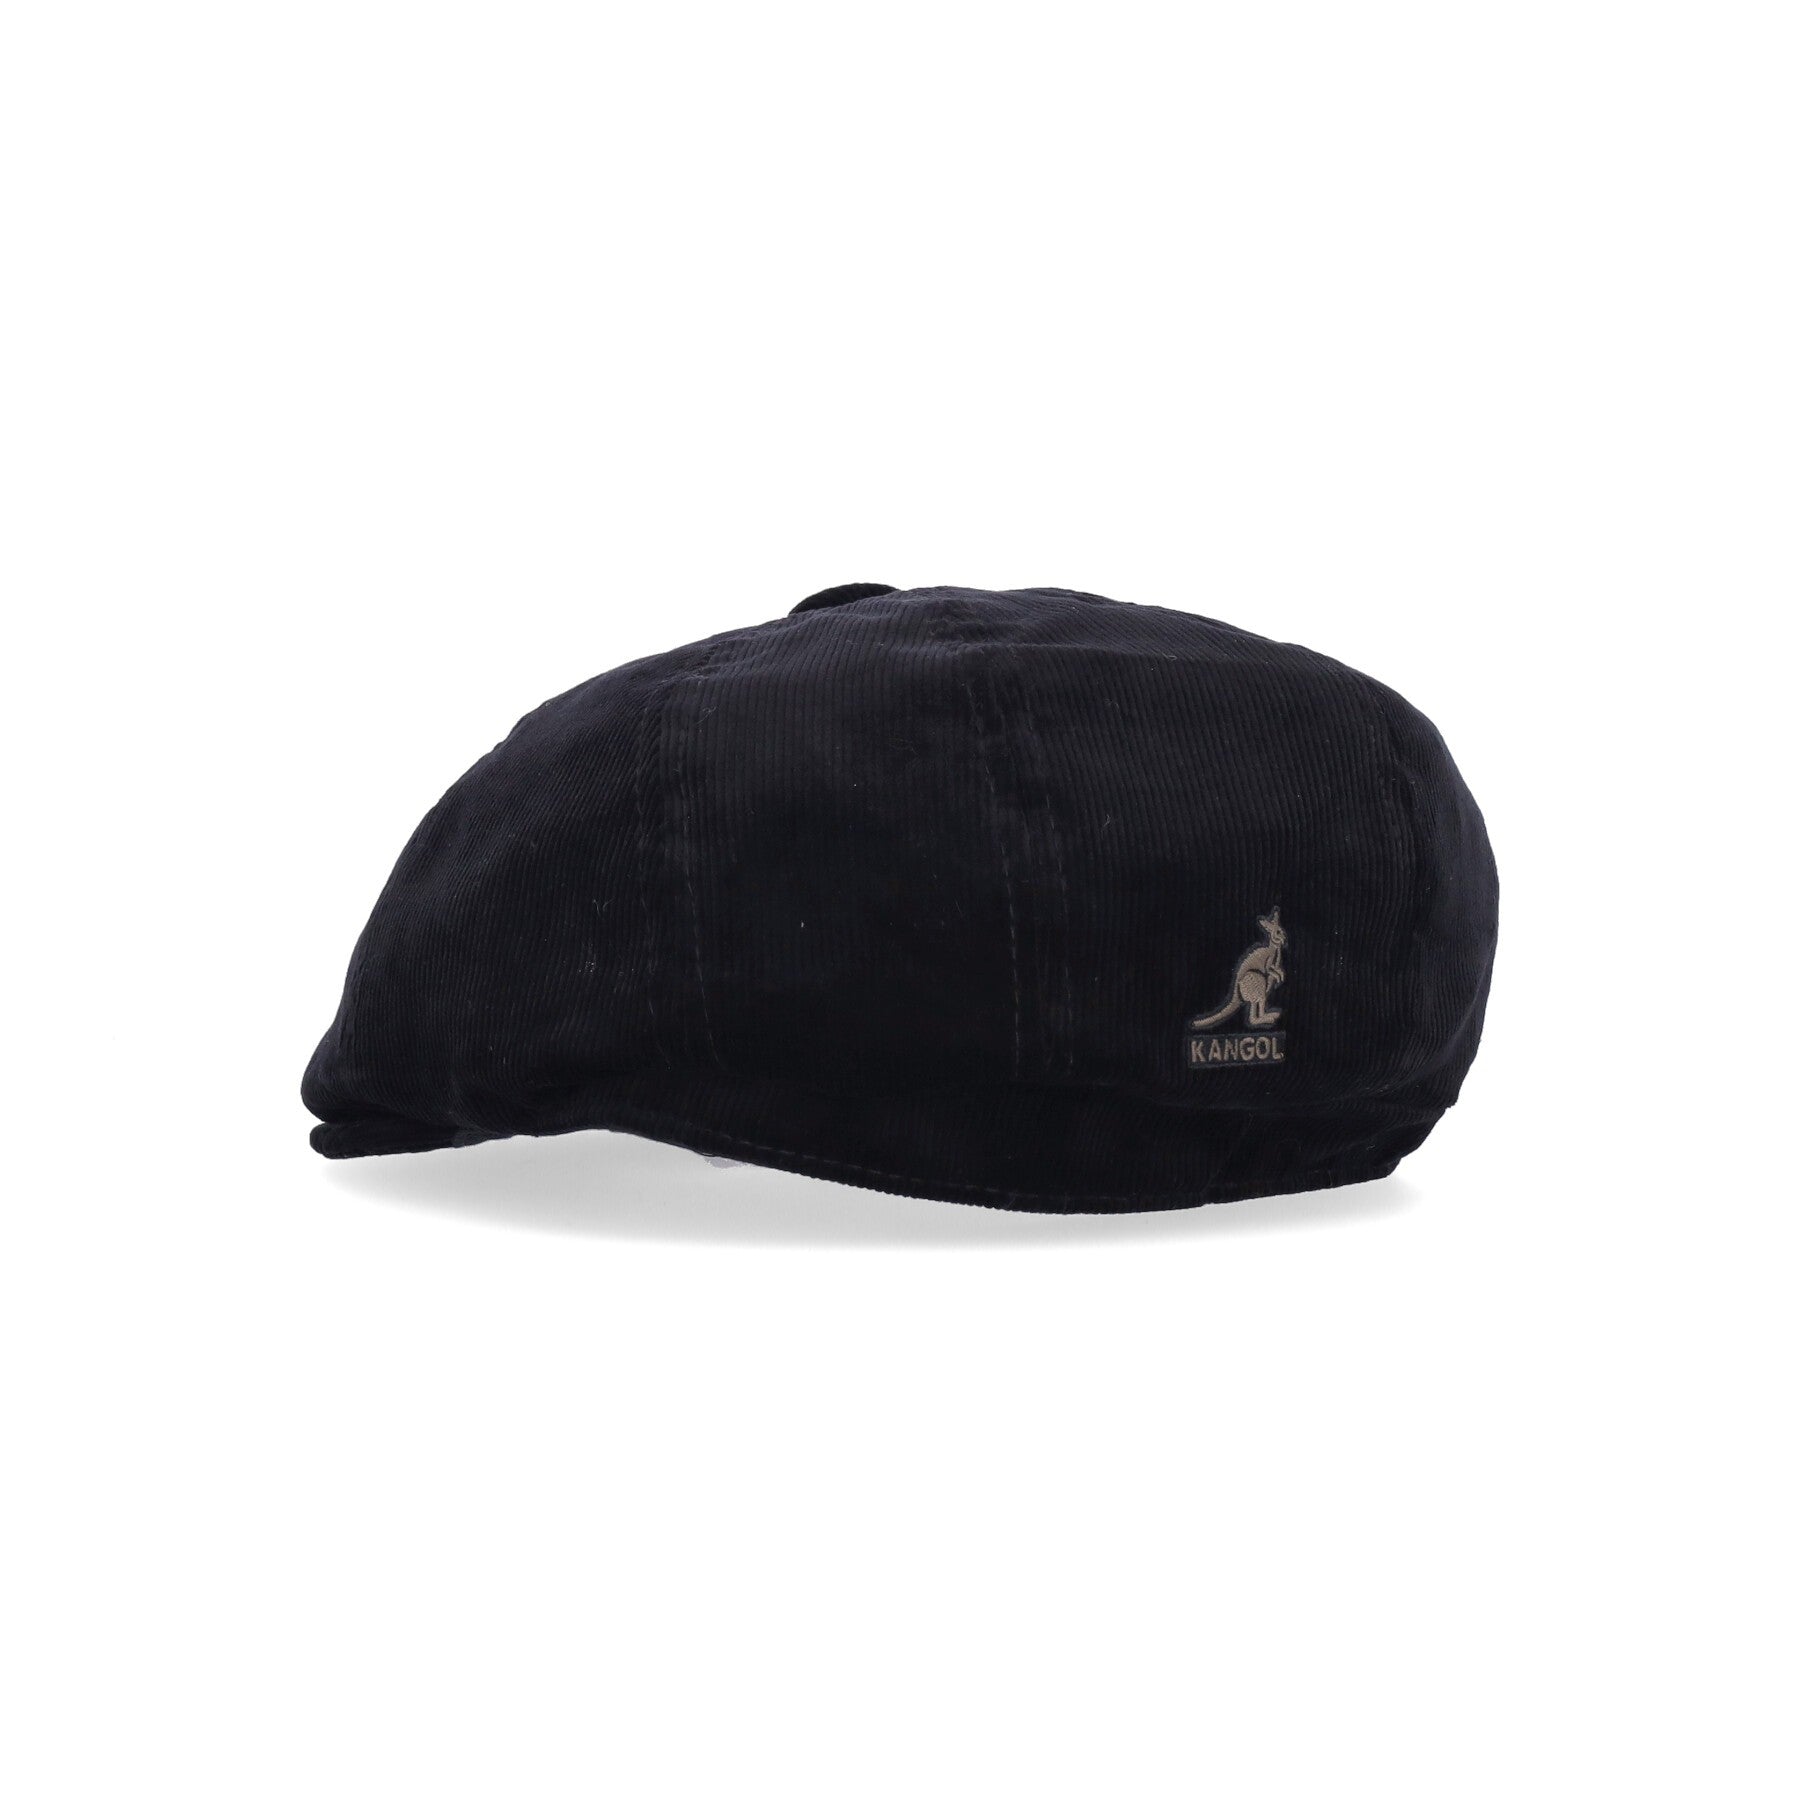 Cord Hawker Black Men's Hat